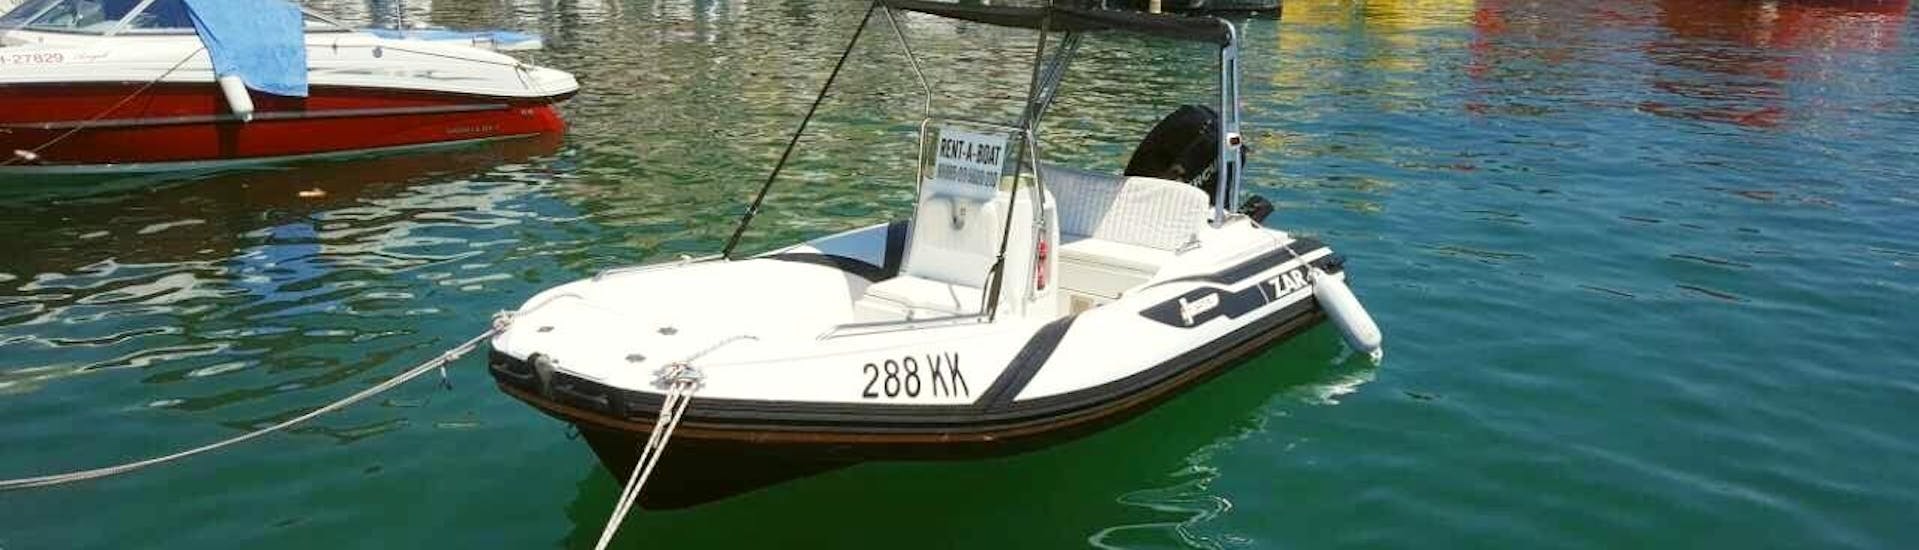 Motorbootverleih für 5 Personen in Krk mit Rent a Boat Phoenix.